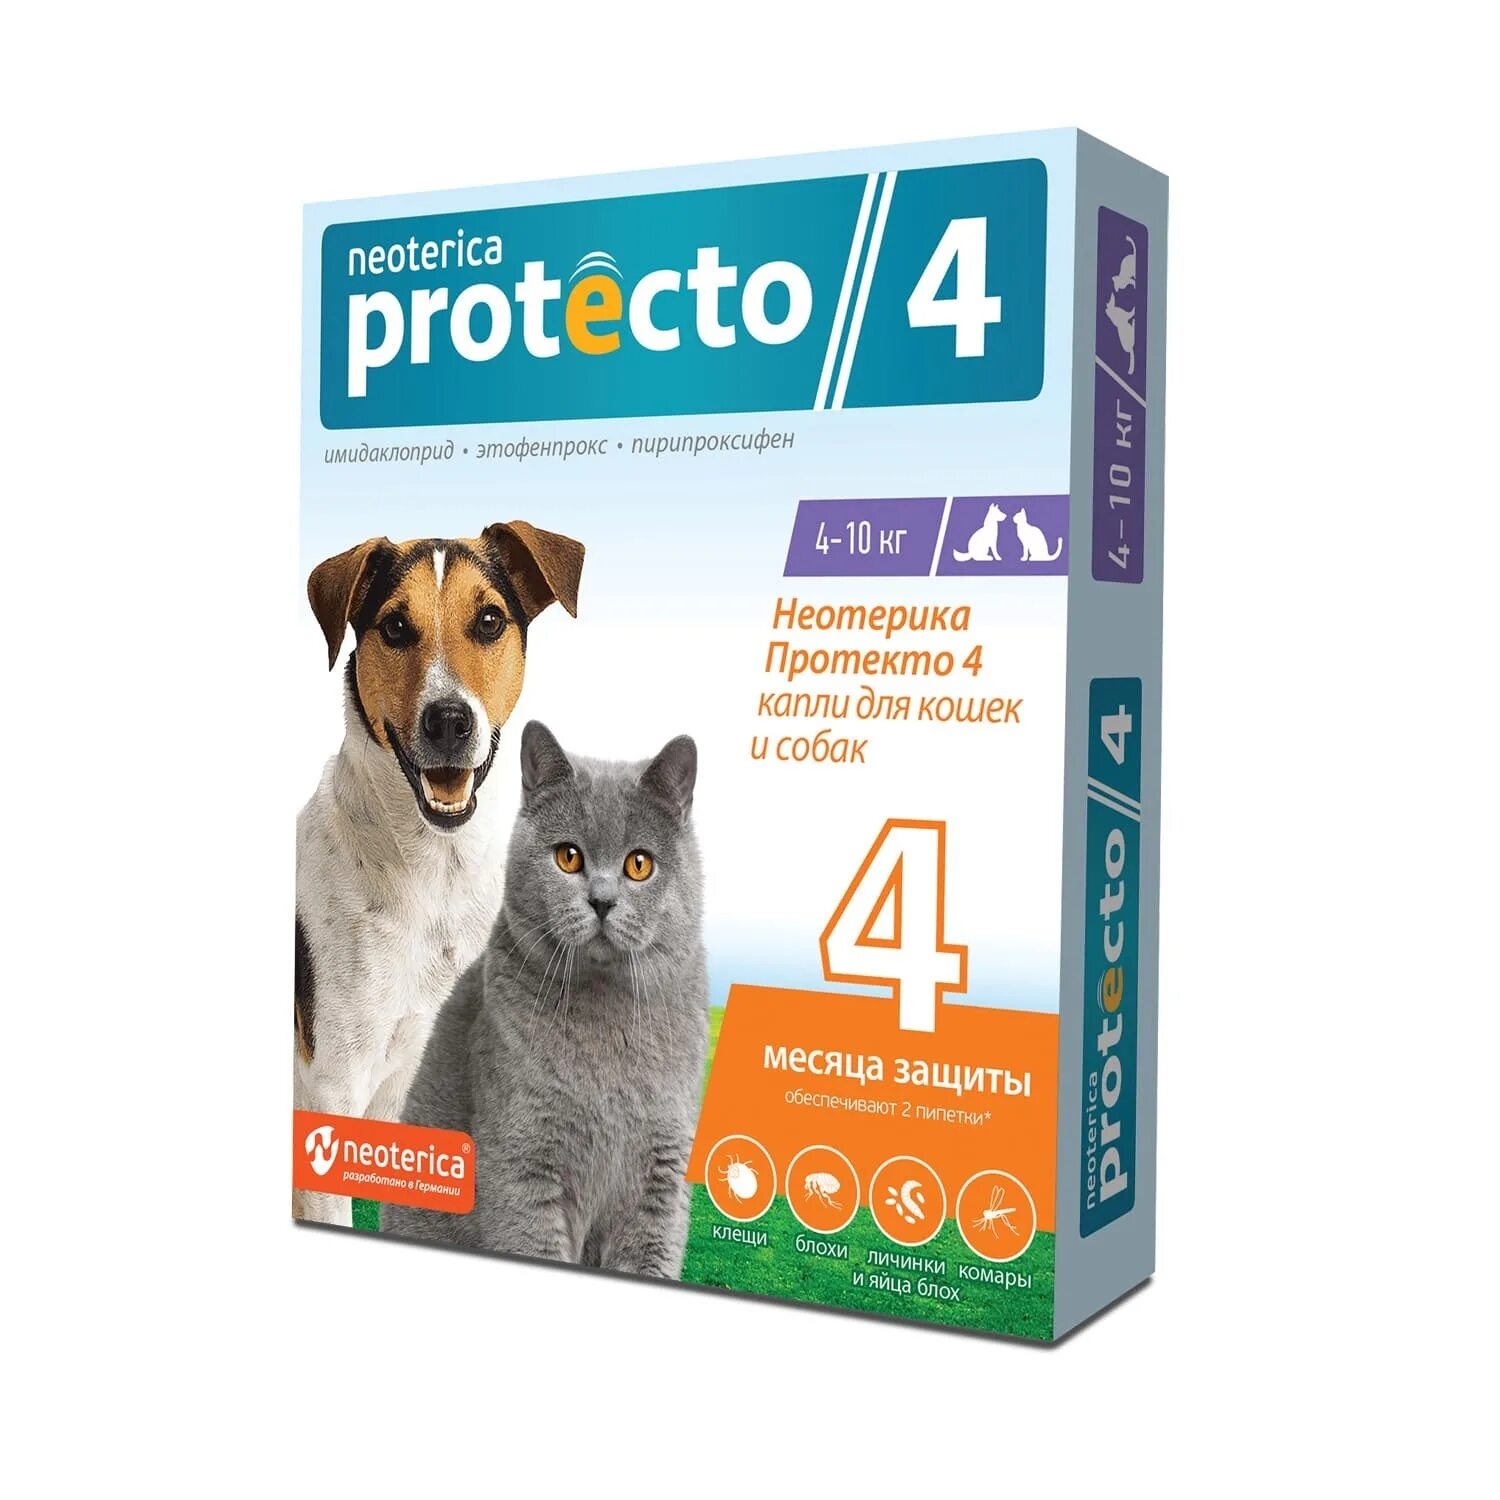 Протекто 4. Neoterica Protecto капли для кошек и собак 4-10 кг. Neoterica Protecto таблетки от клещей. Ошейник Protecto для кошек. Средство от клещей для собак и кошек